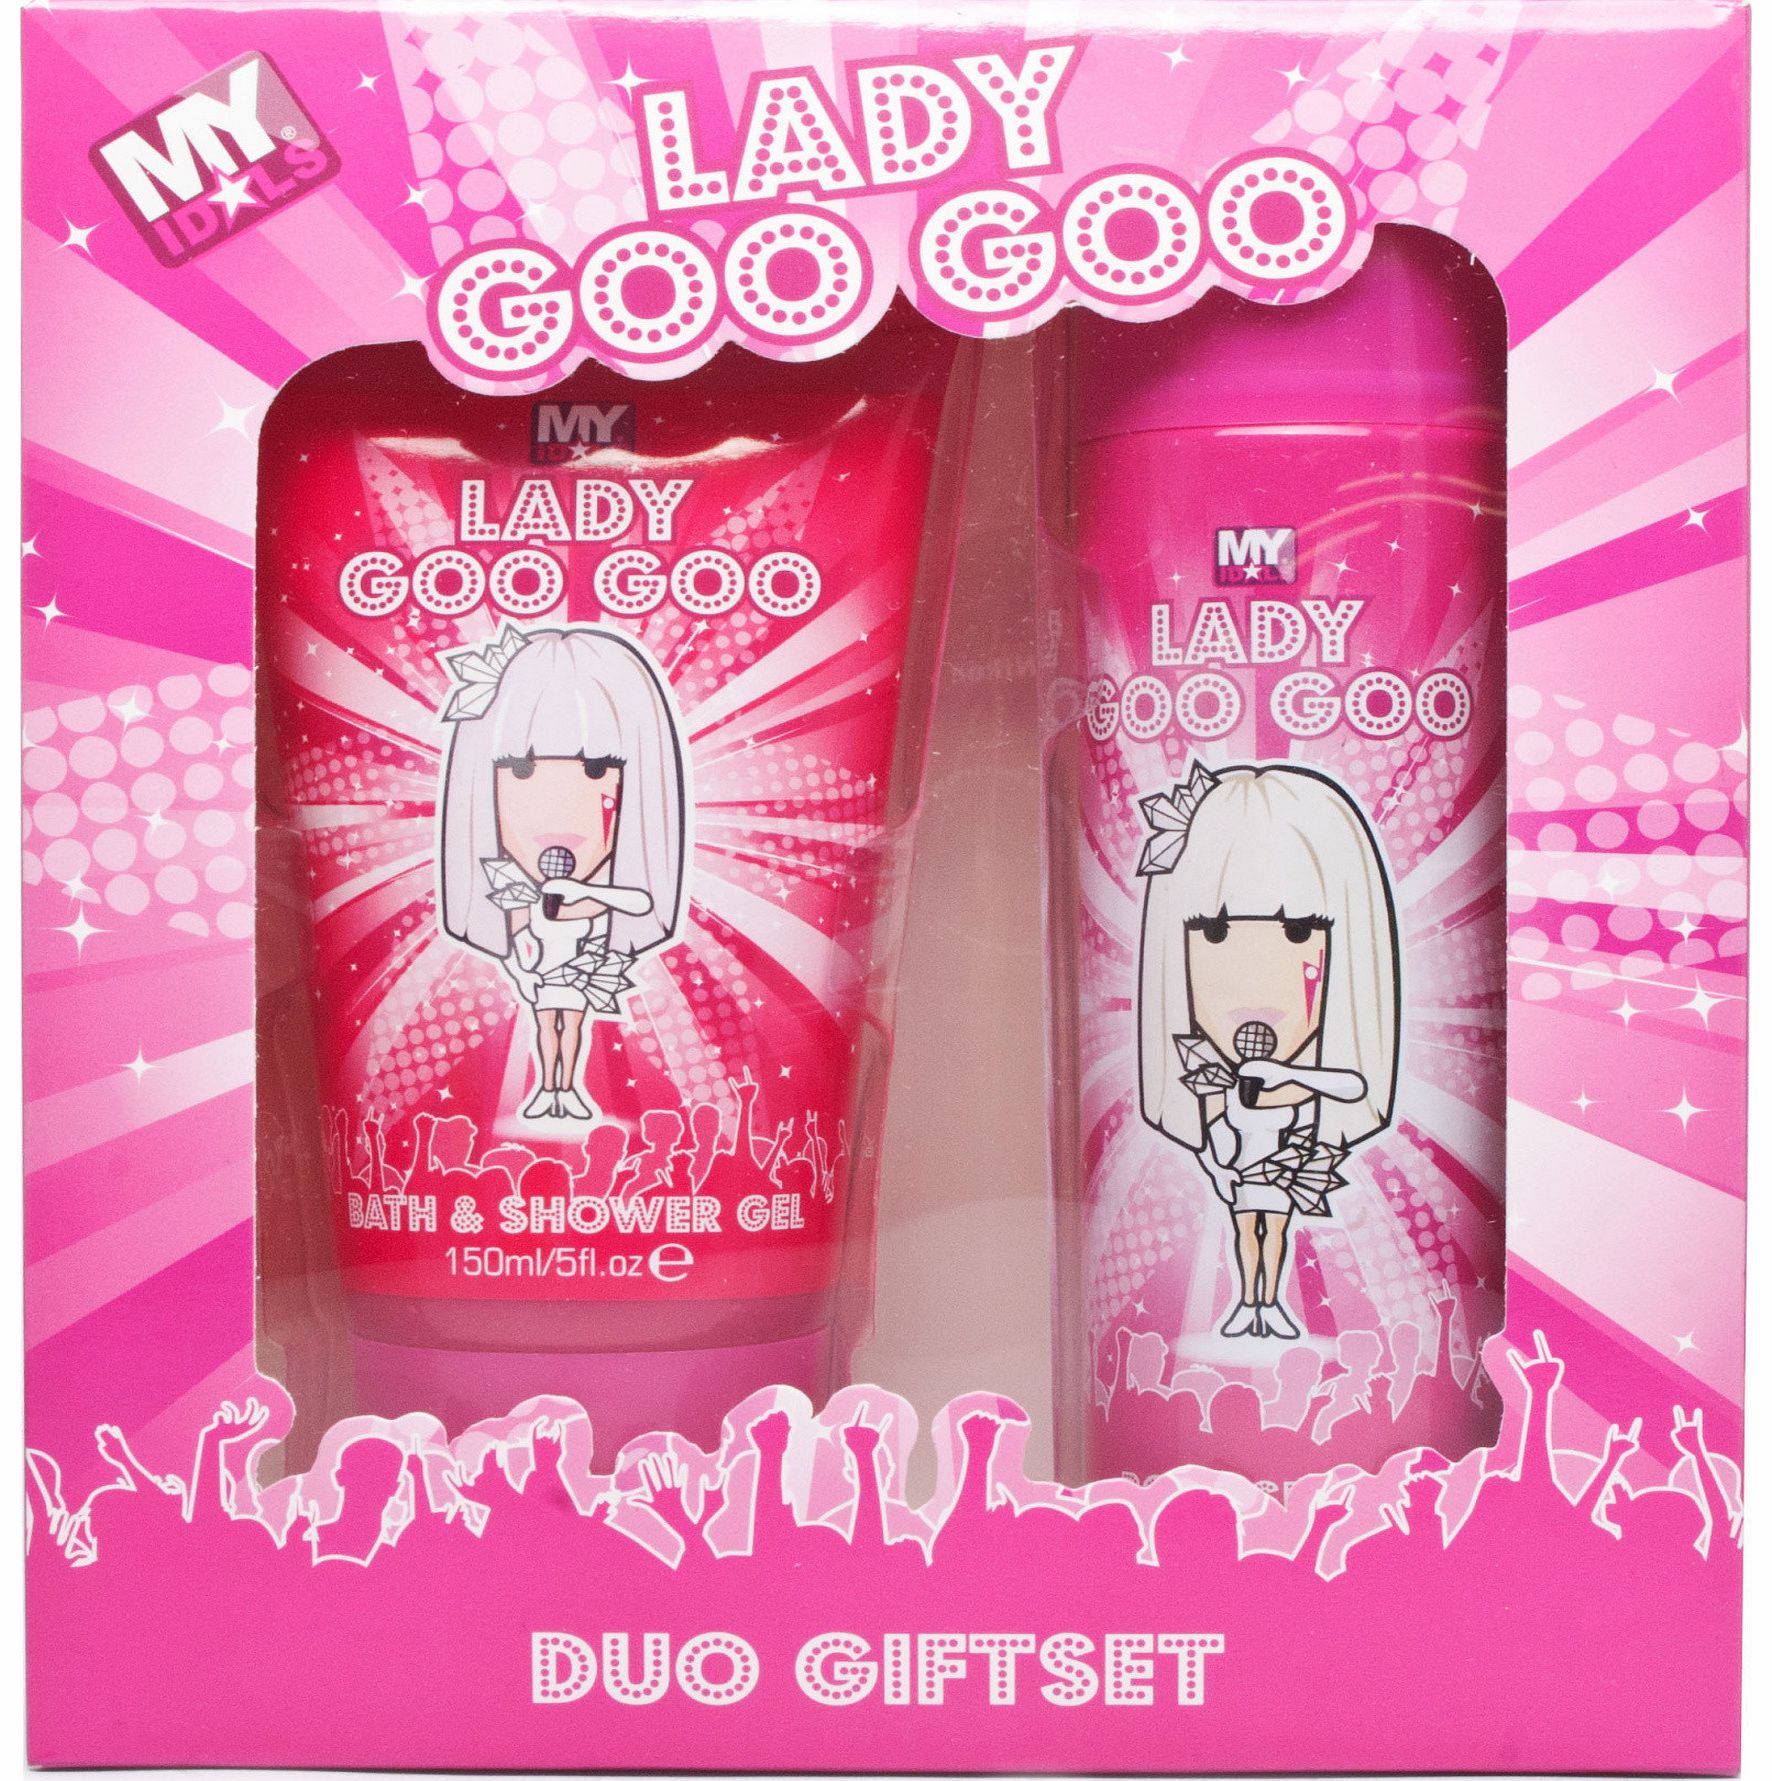 Idols Lady Goo Goo Duo Set